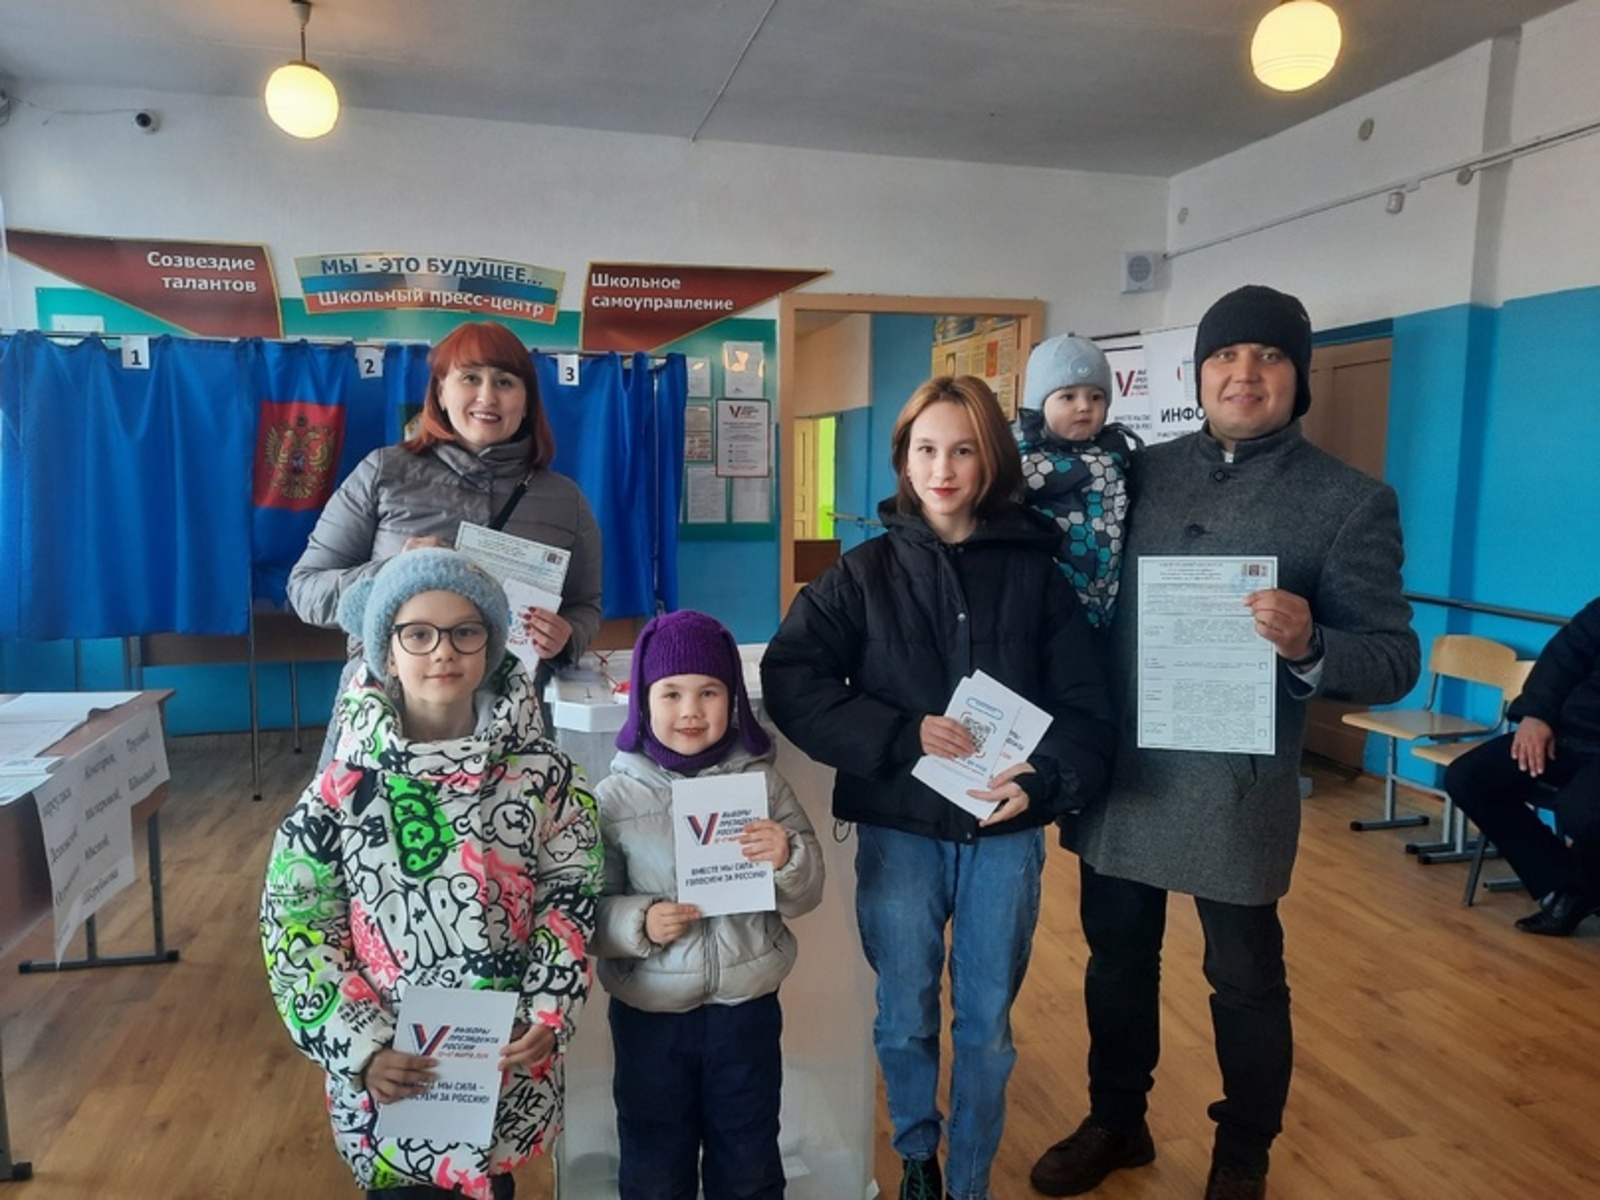 Явка на выборы Президента РФ в Башкирии составила 83,73 %